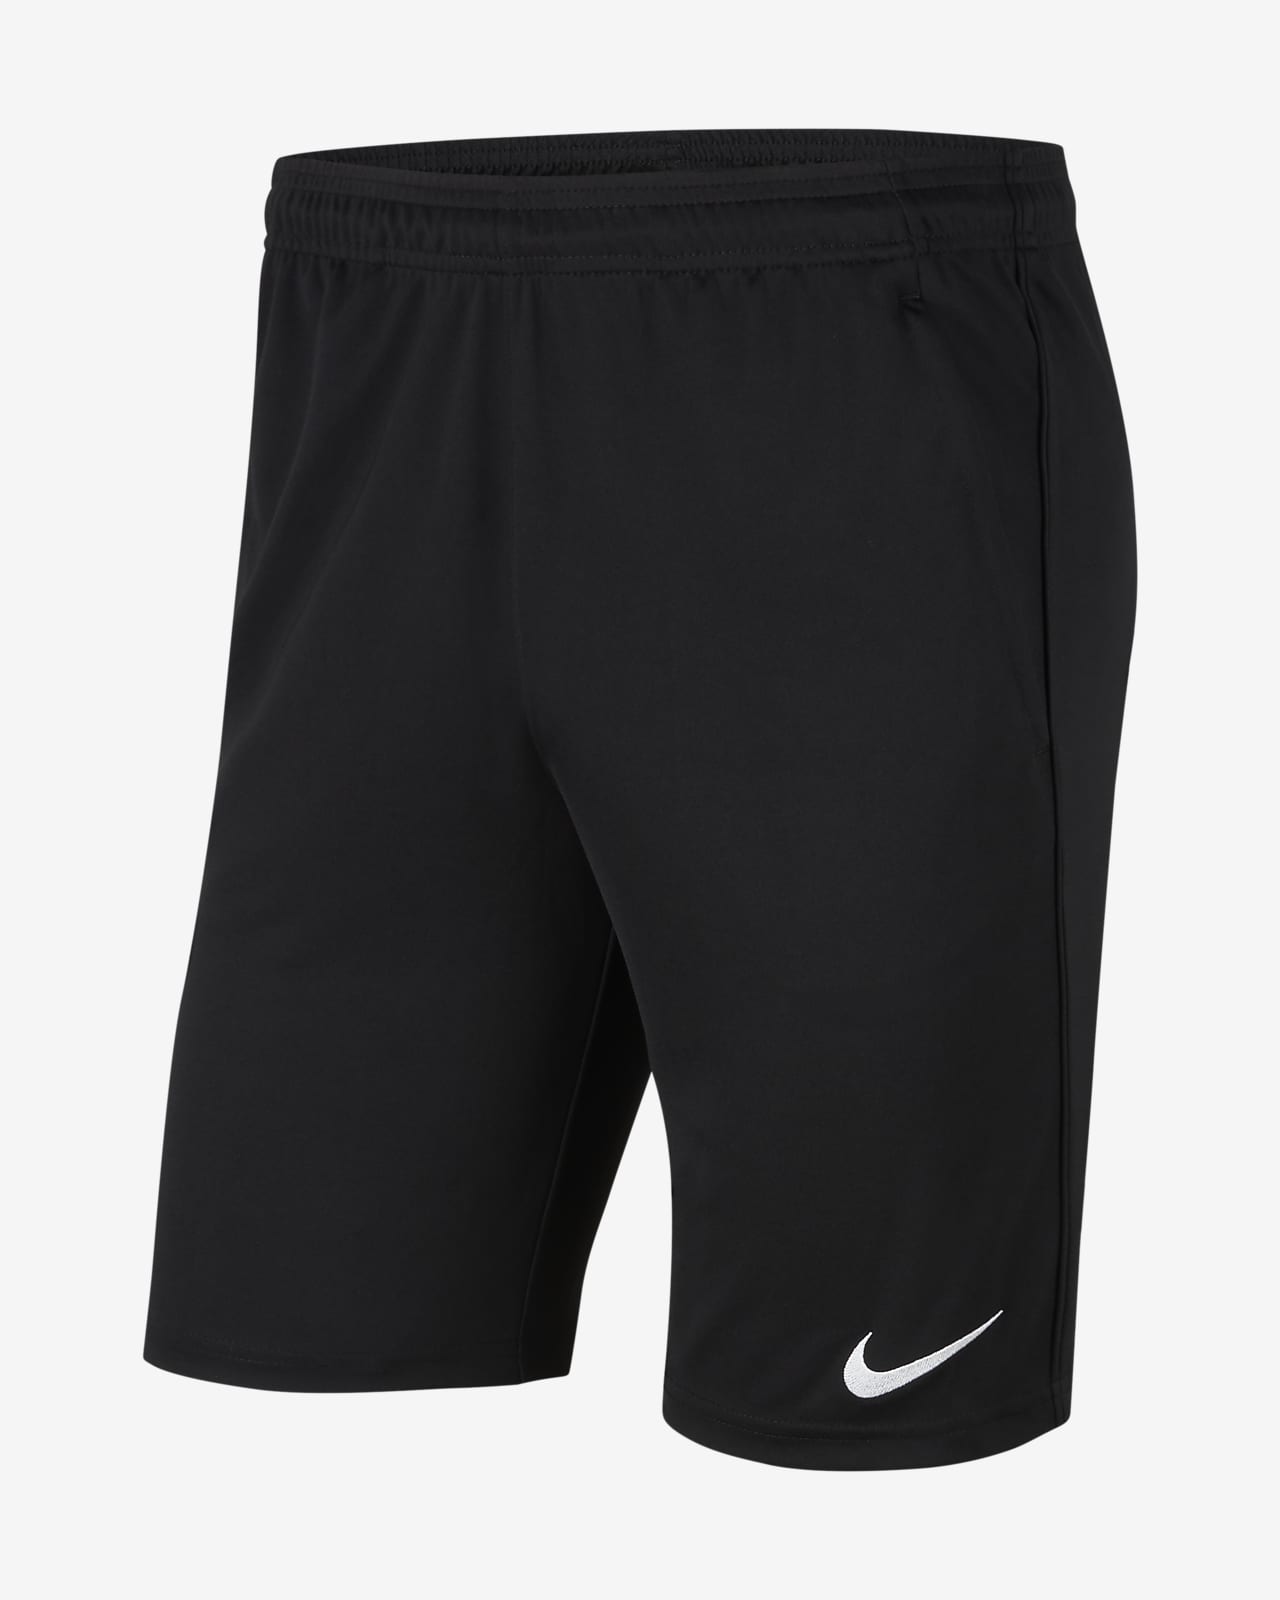 Shorts fútbol de tejido Knit hombre Nike Dri-FIT Nike.com